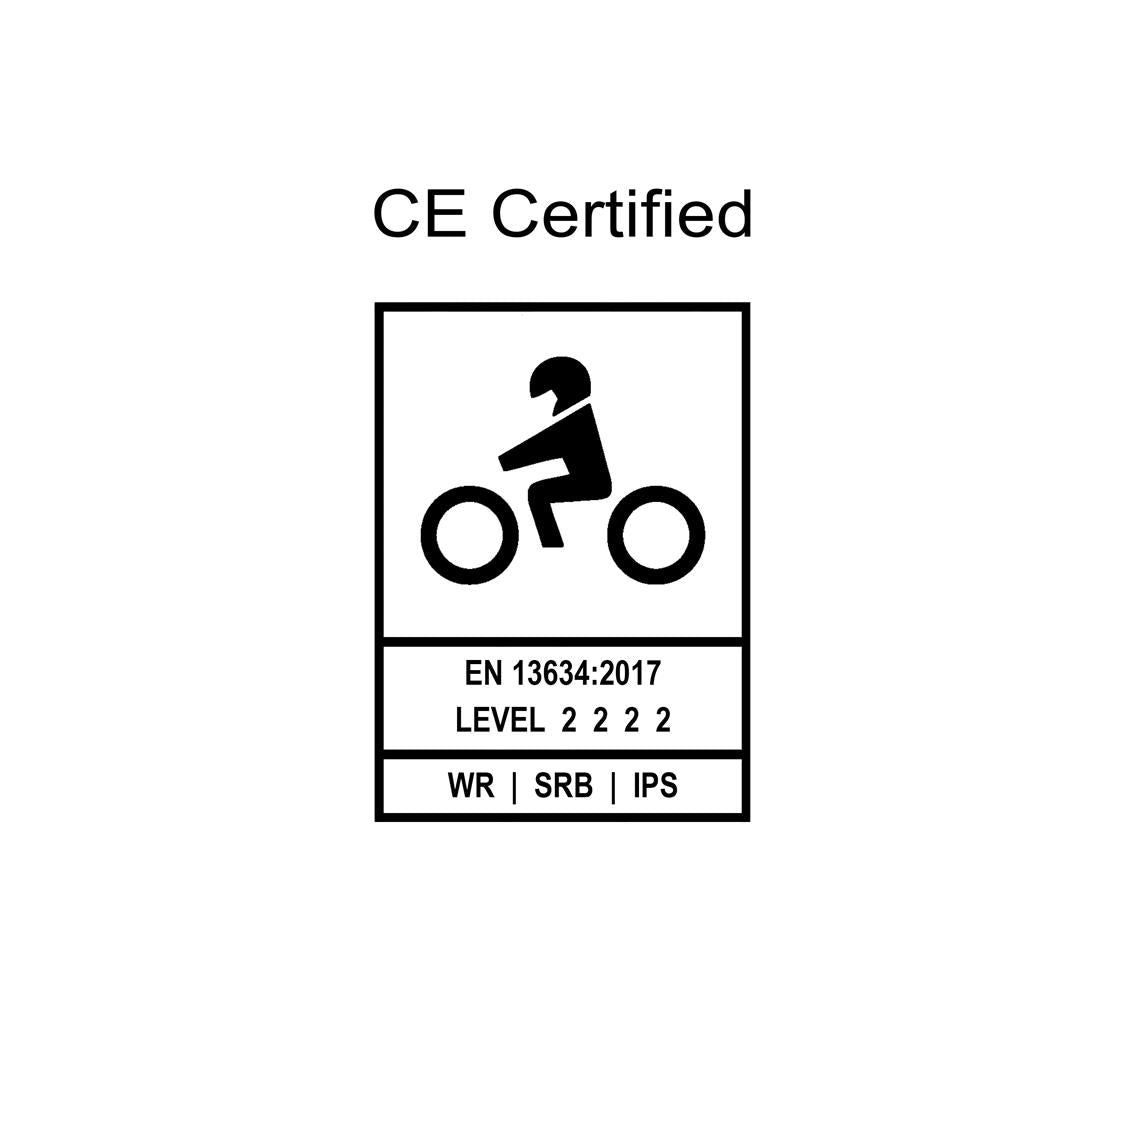 FBR072 Everest GTX CE Label